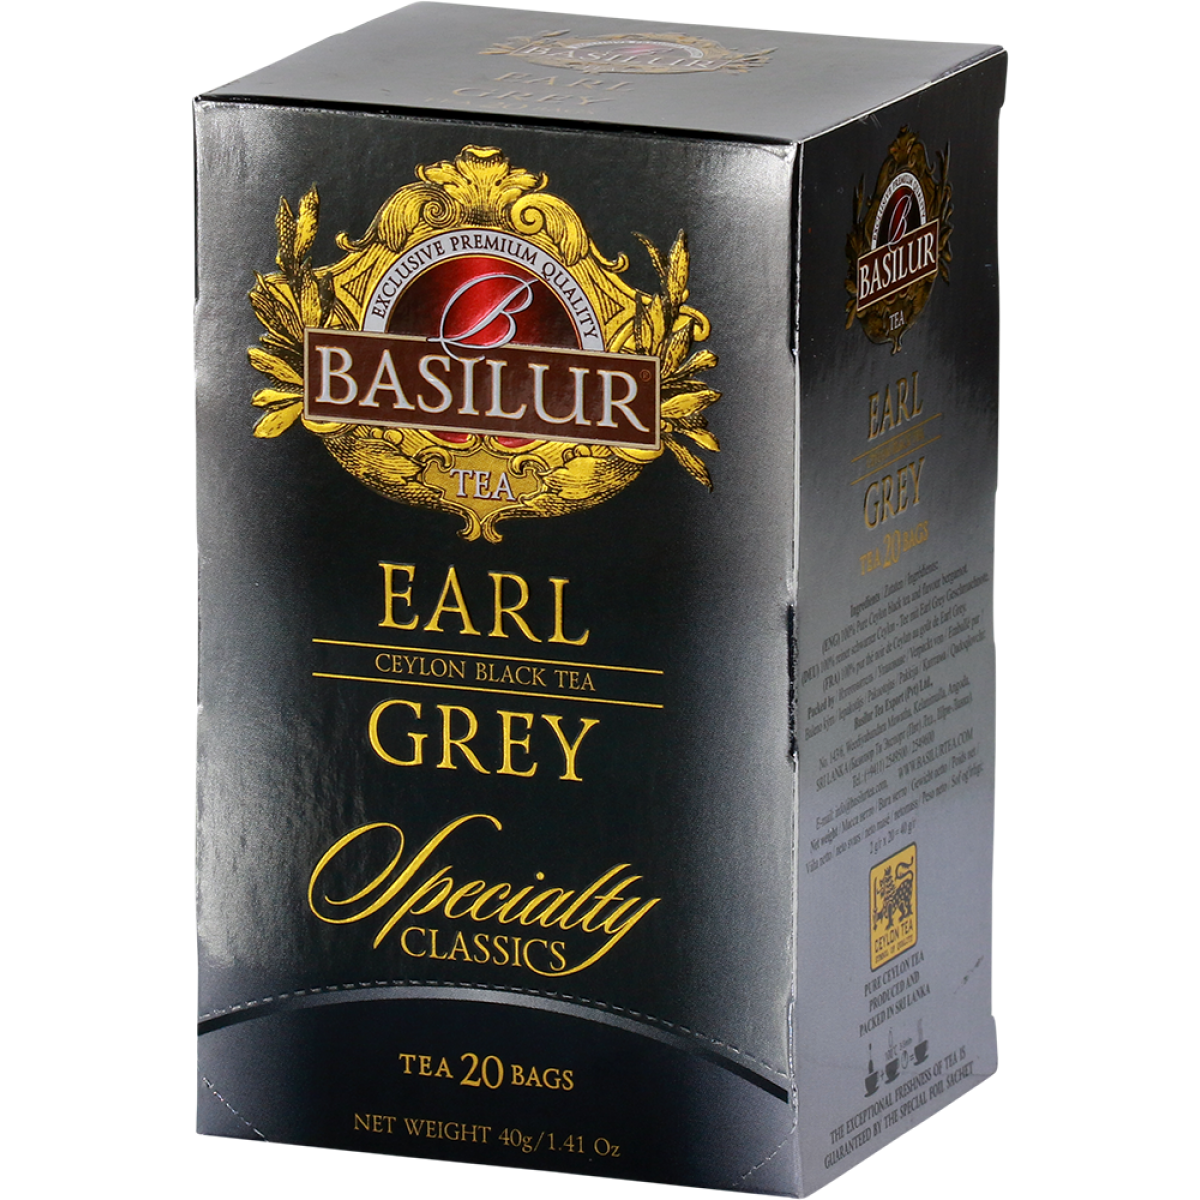 Basilur Specialty Classic Earl Grey Ceylon Tea, 20 Count Tea Bags